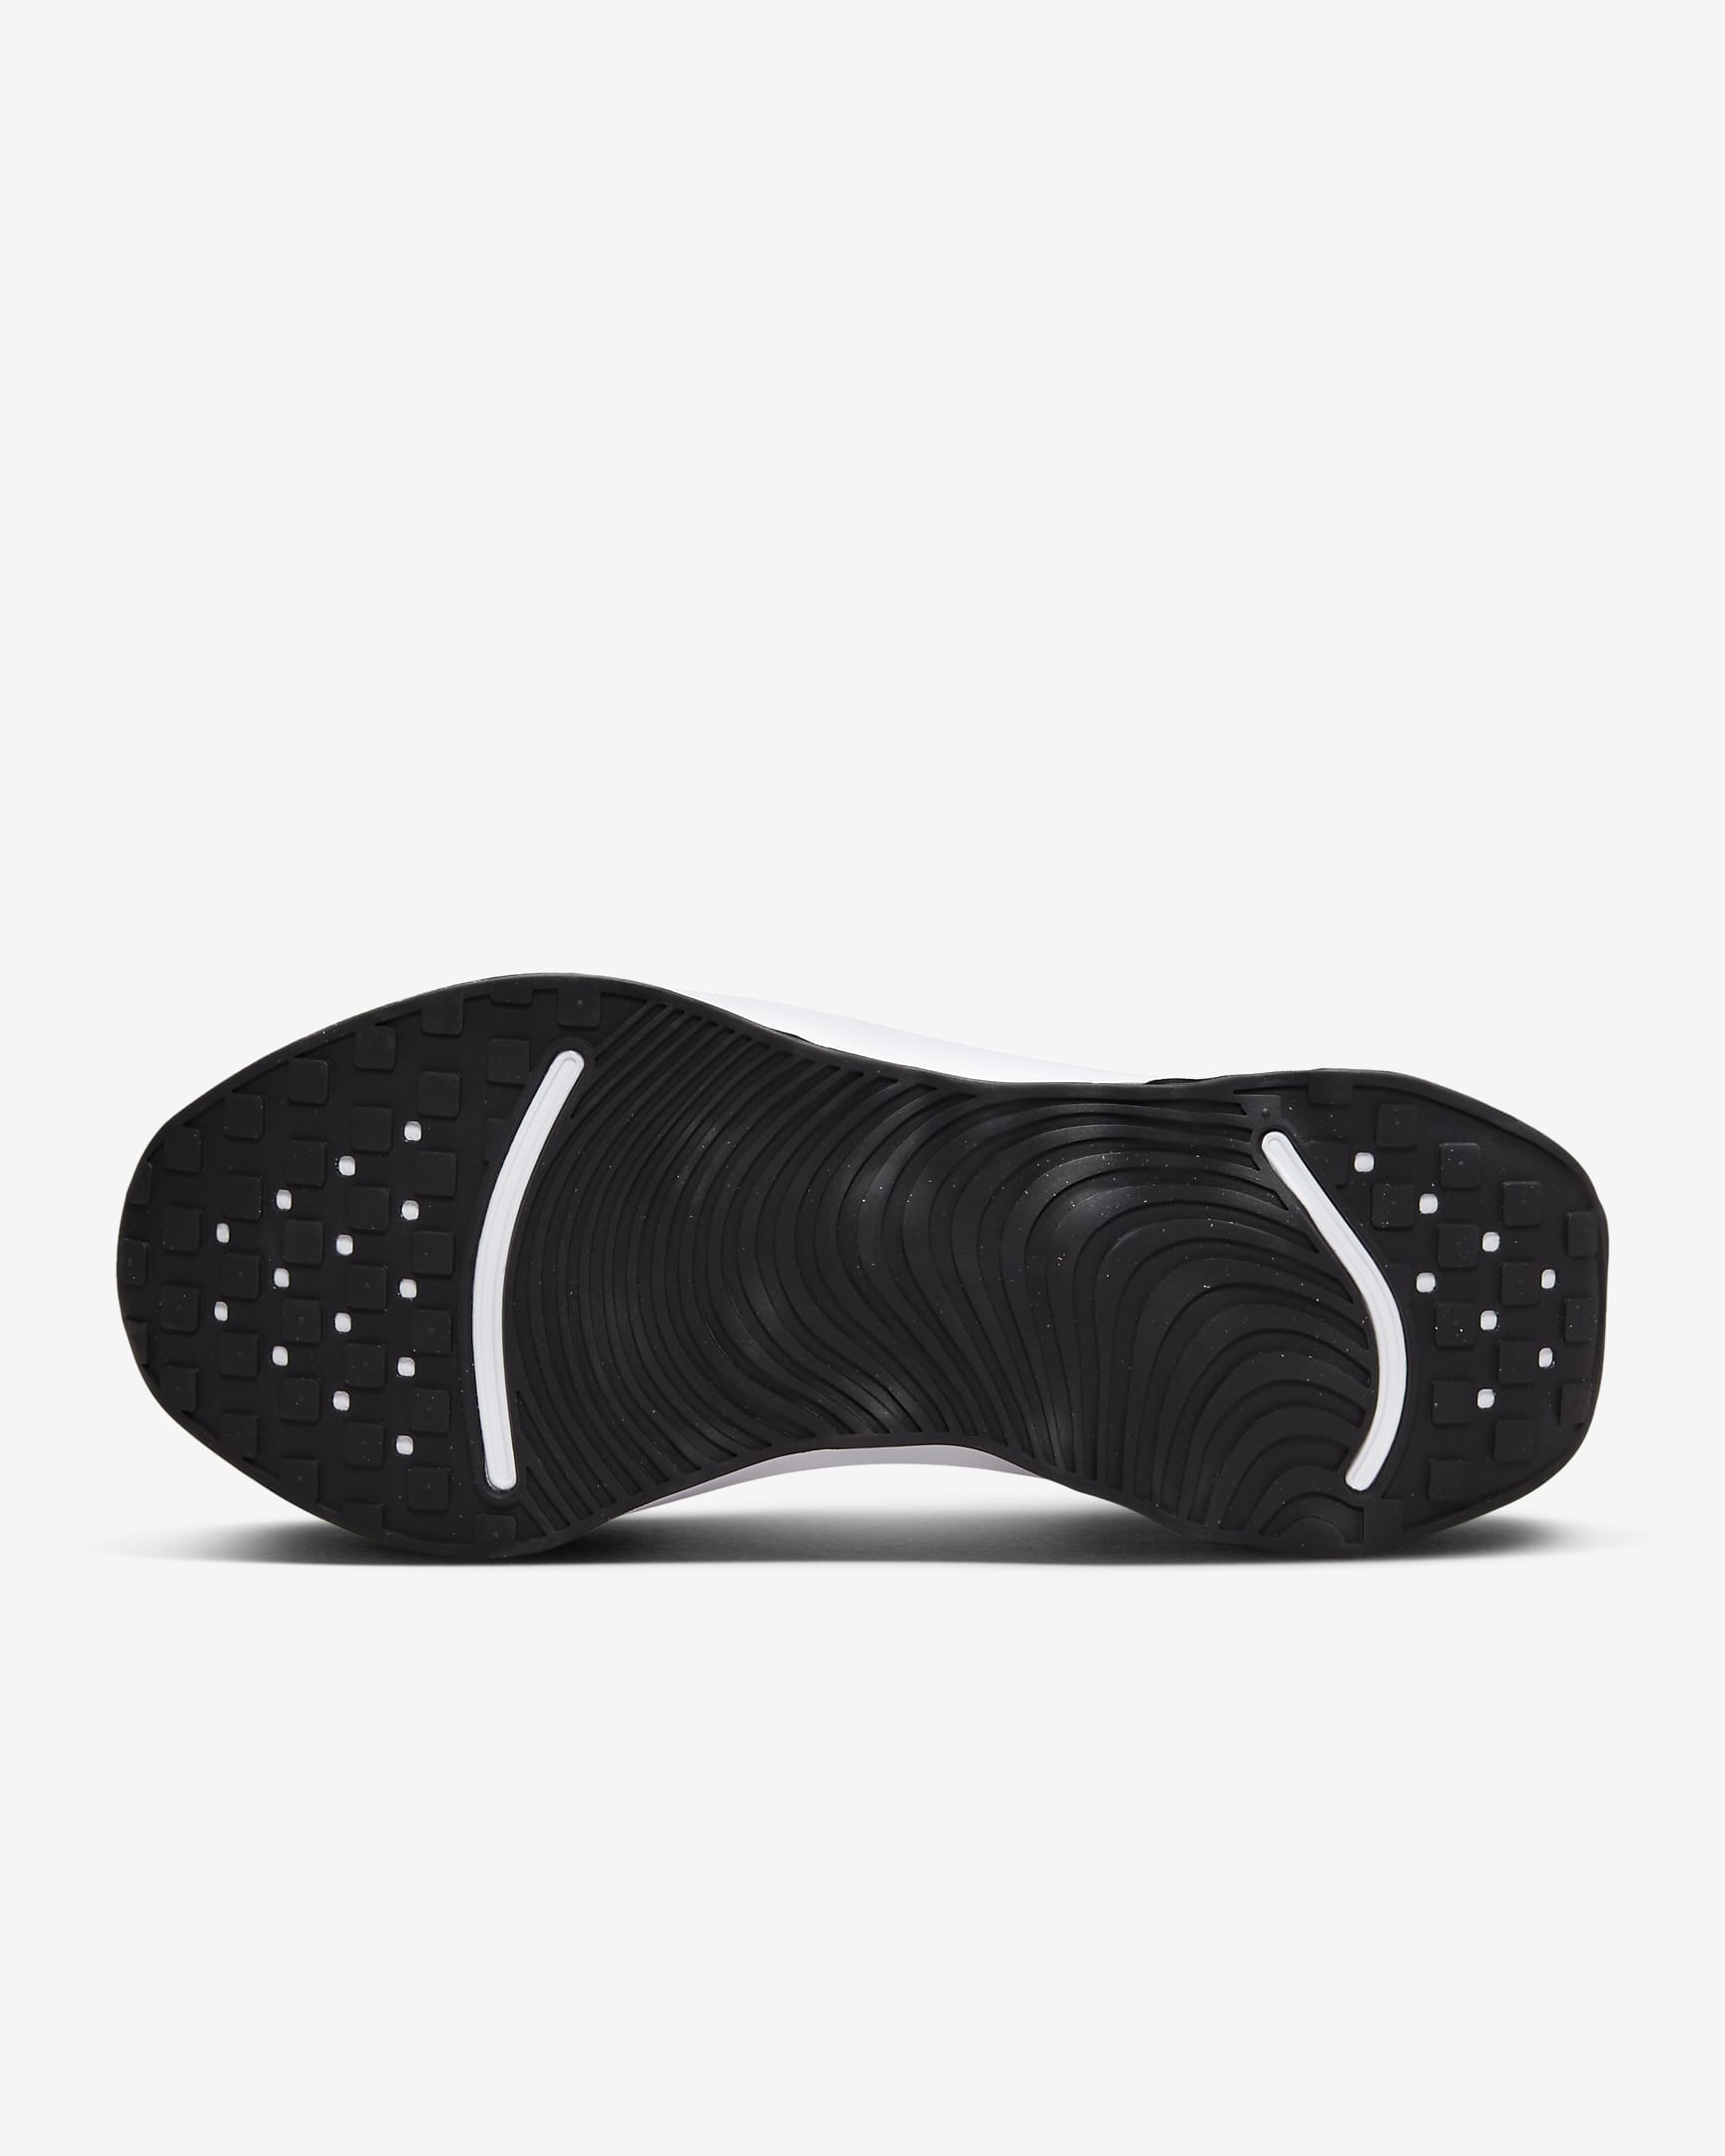 Scarpa da camminata Nike Motiva – Donna - Nero/Antracite/Bianco/Nero